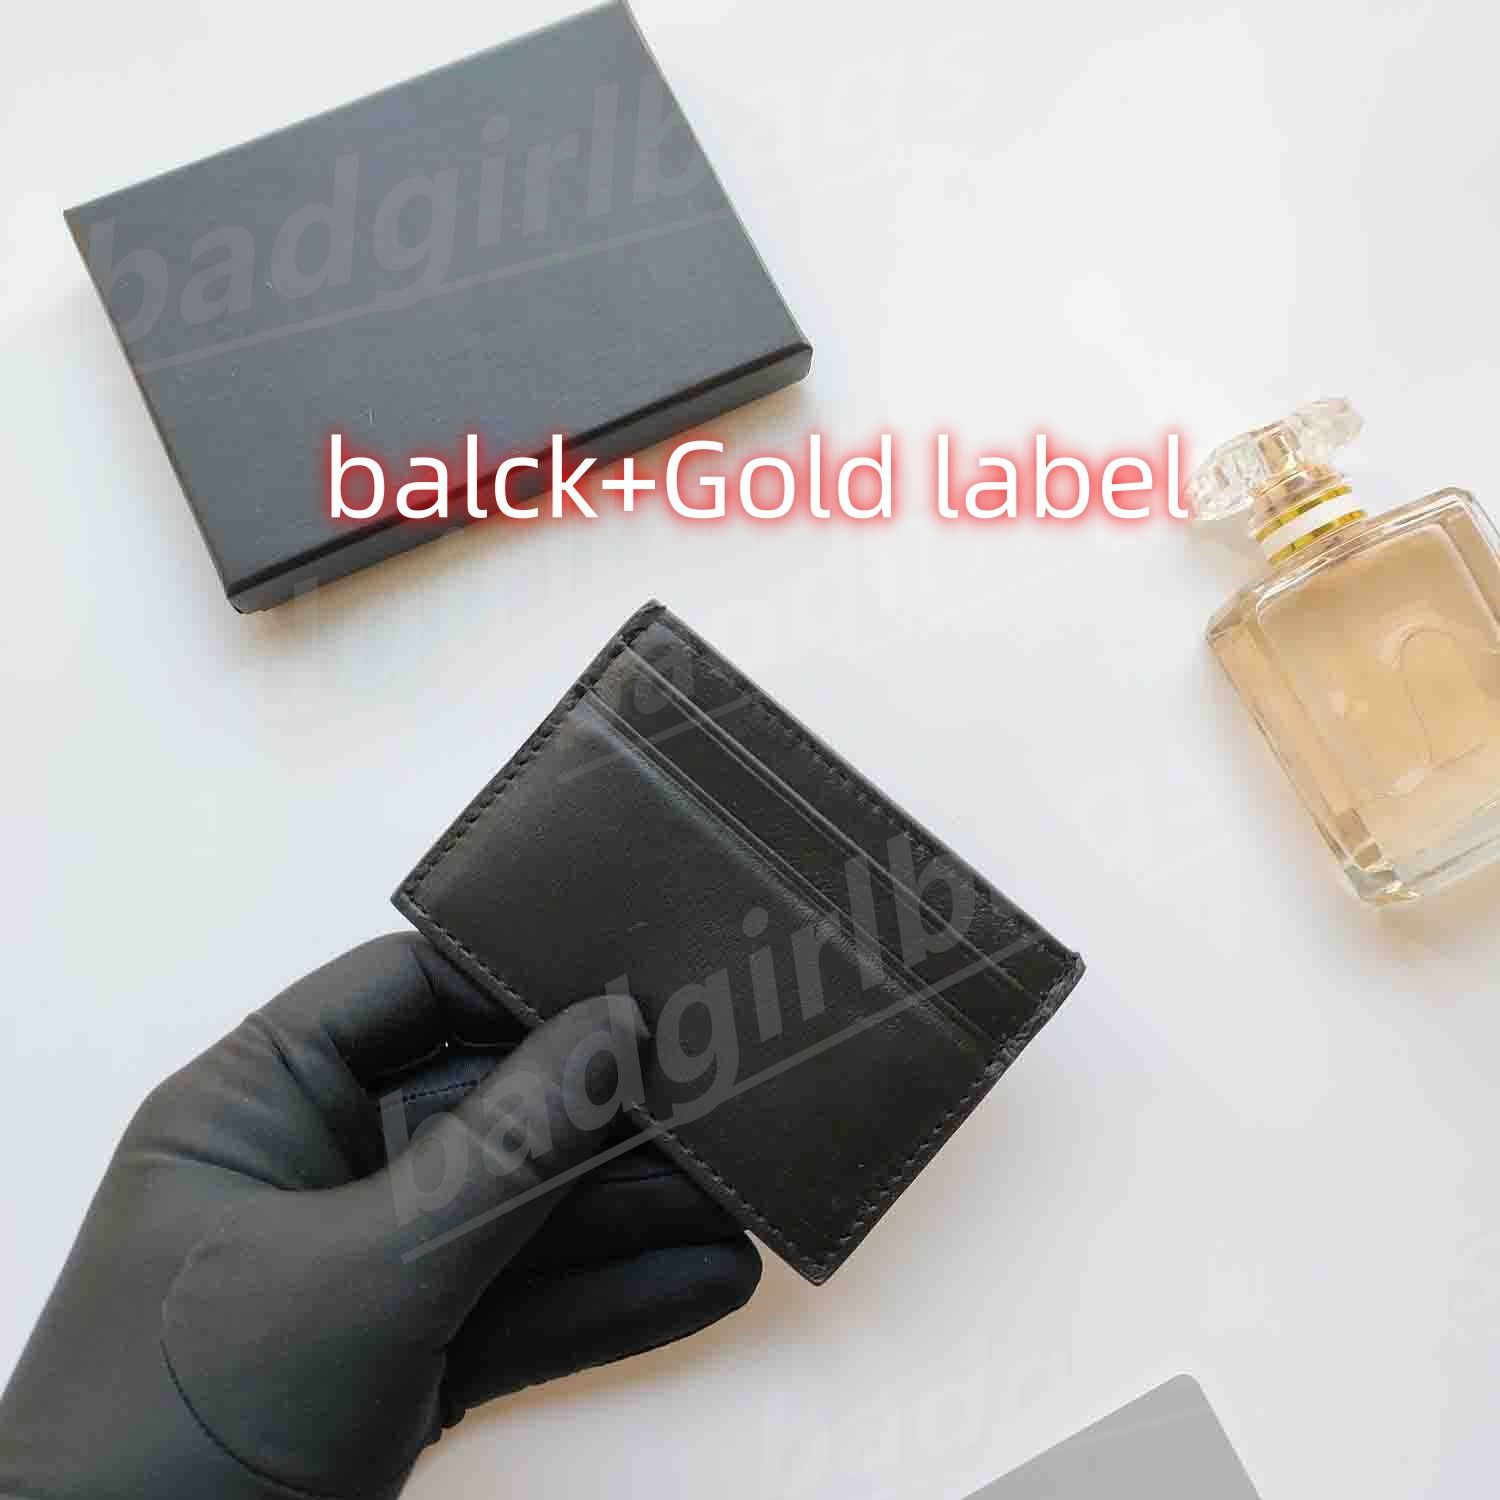 2-balck+Gold label